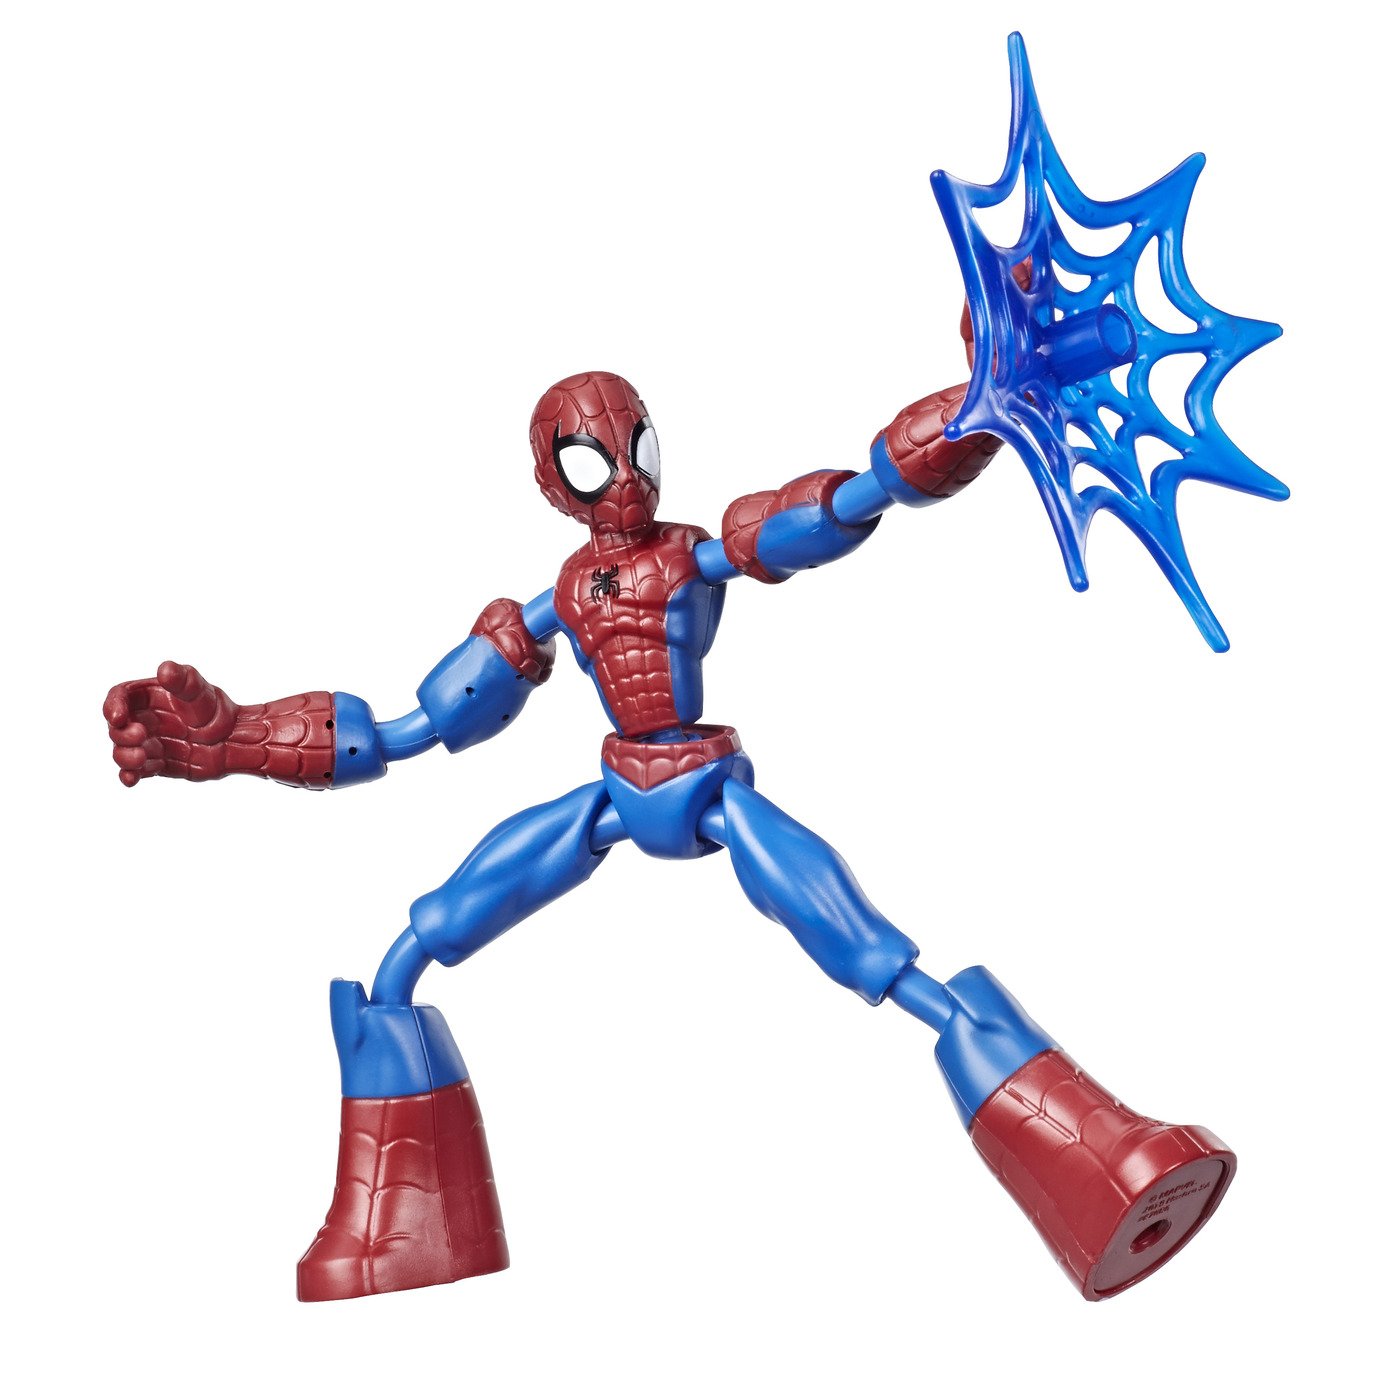 Marvel Spider-Man Bend and Flex Spider-Man Figure review